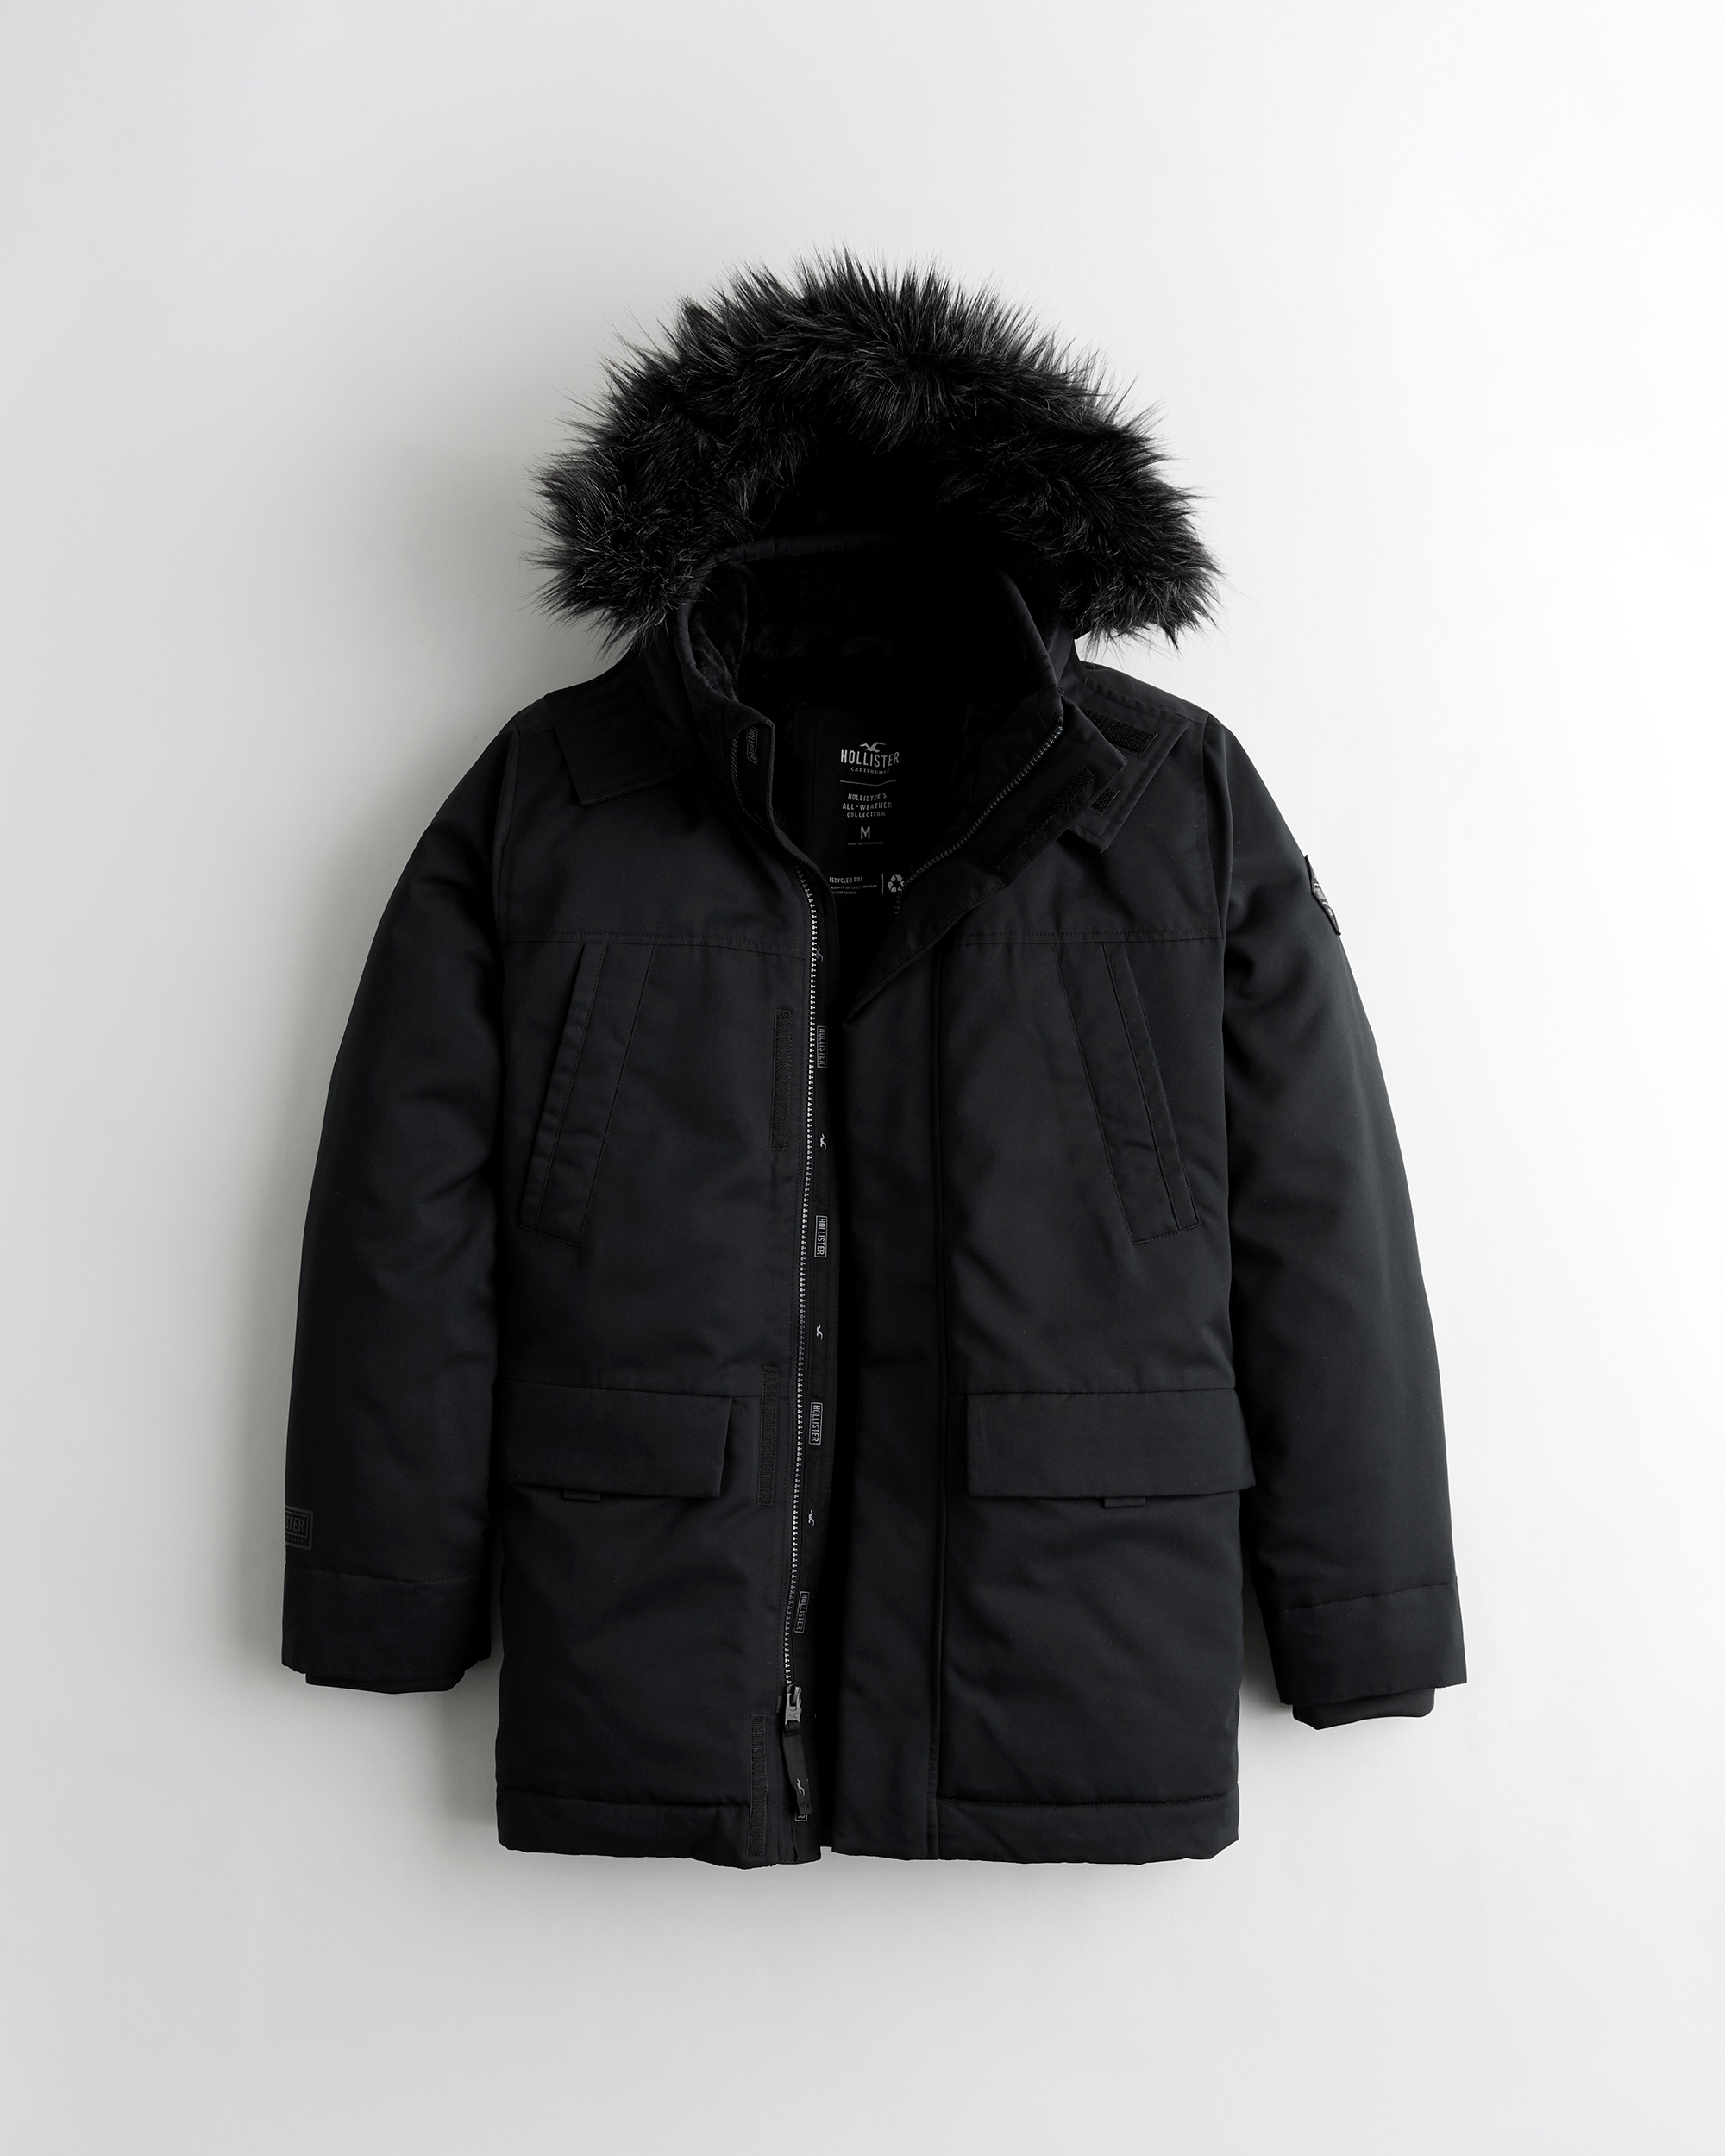 hollister winter jackets clearance